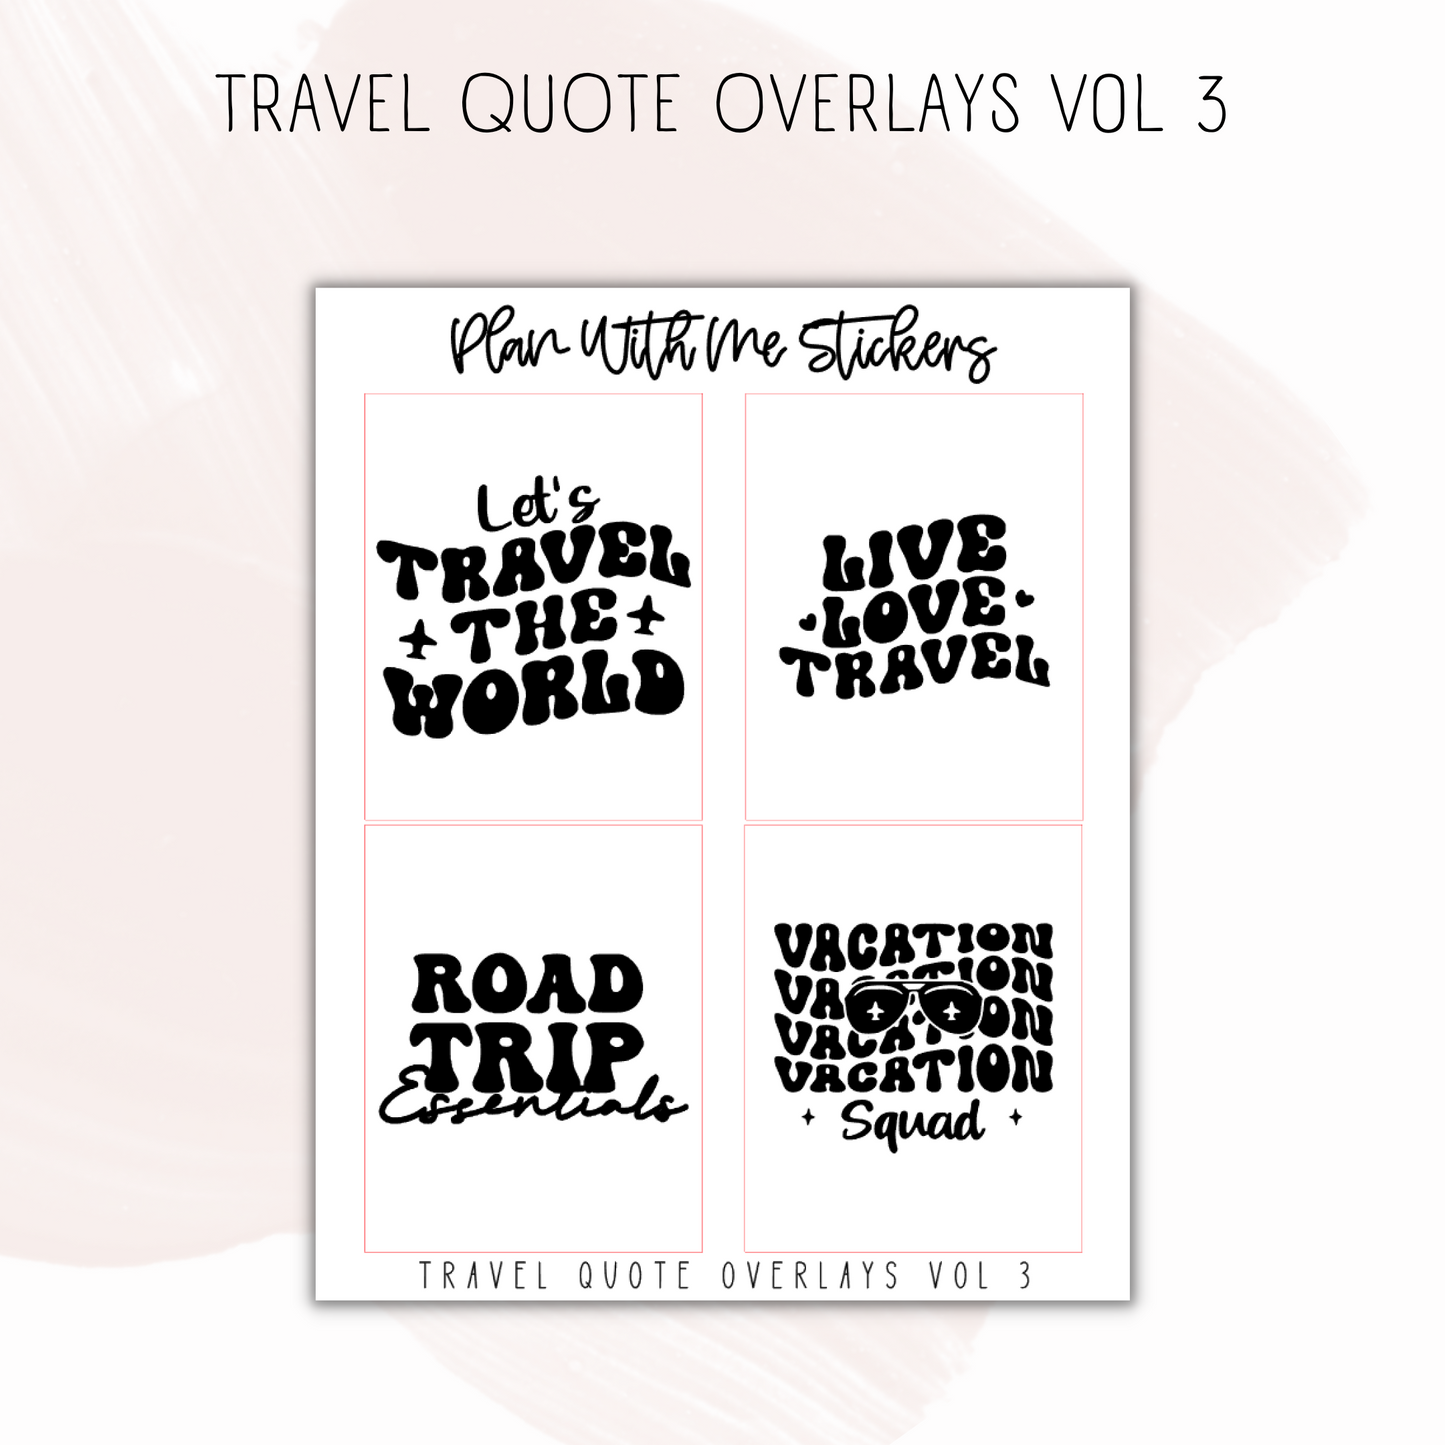 Travel Quote Overlays Vol 3